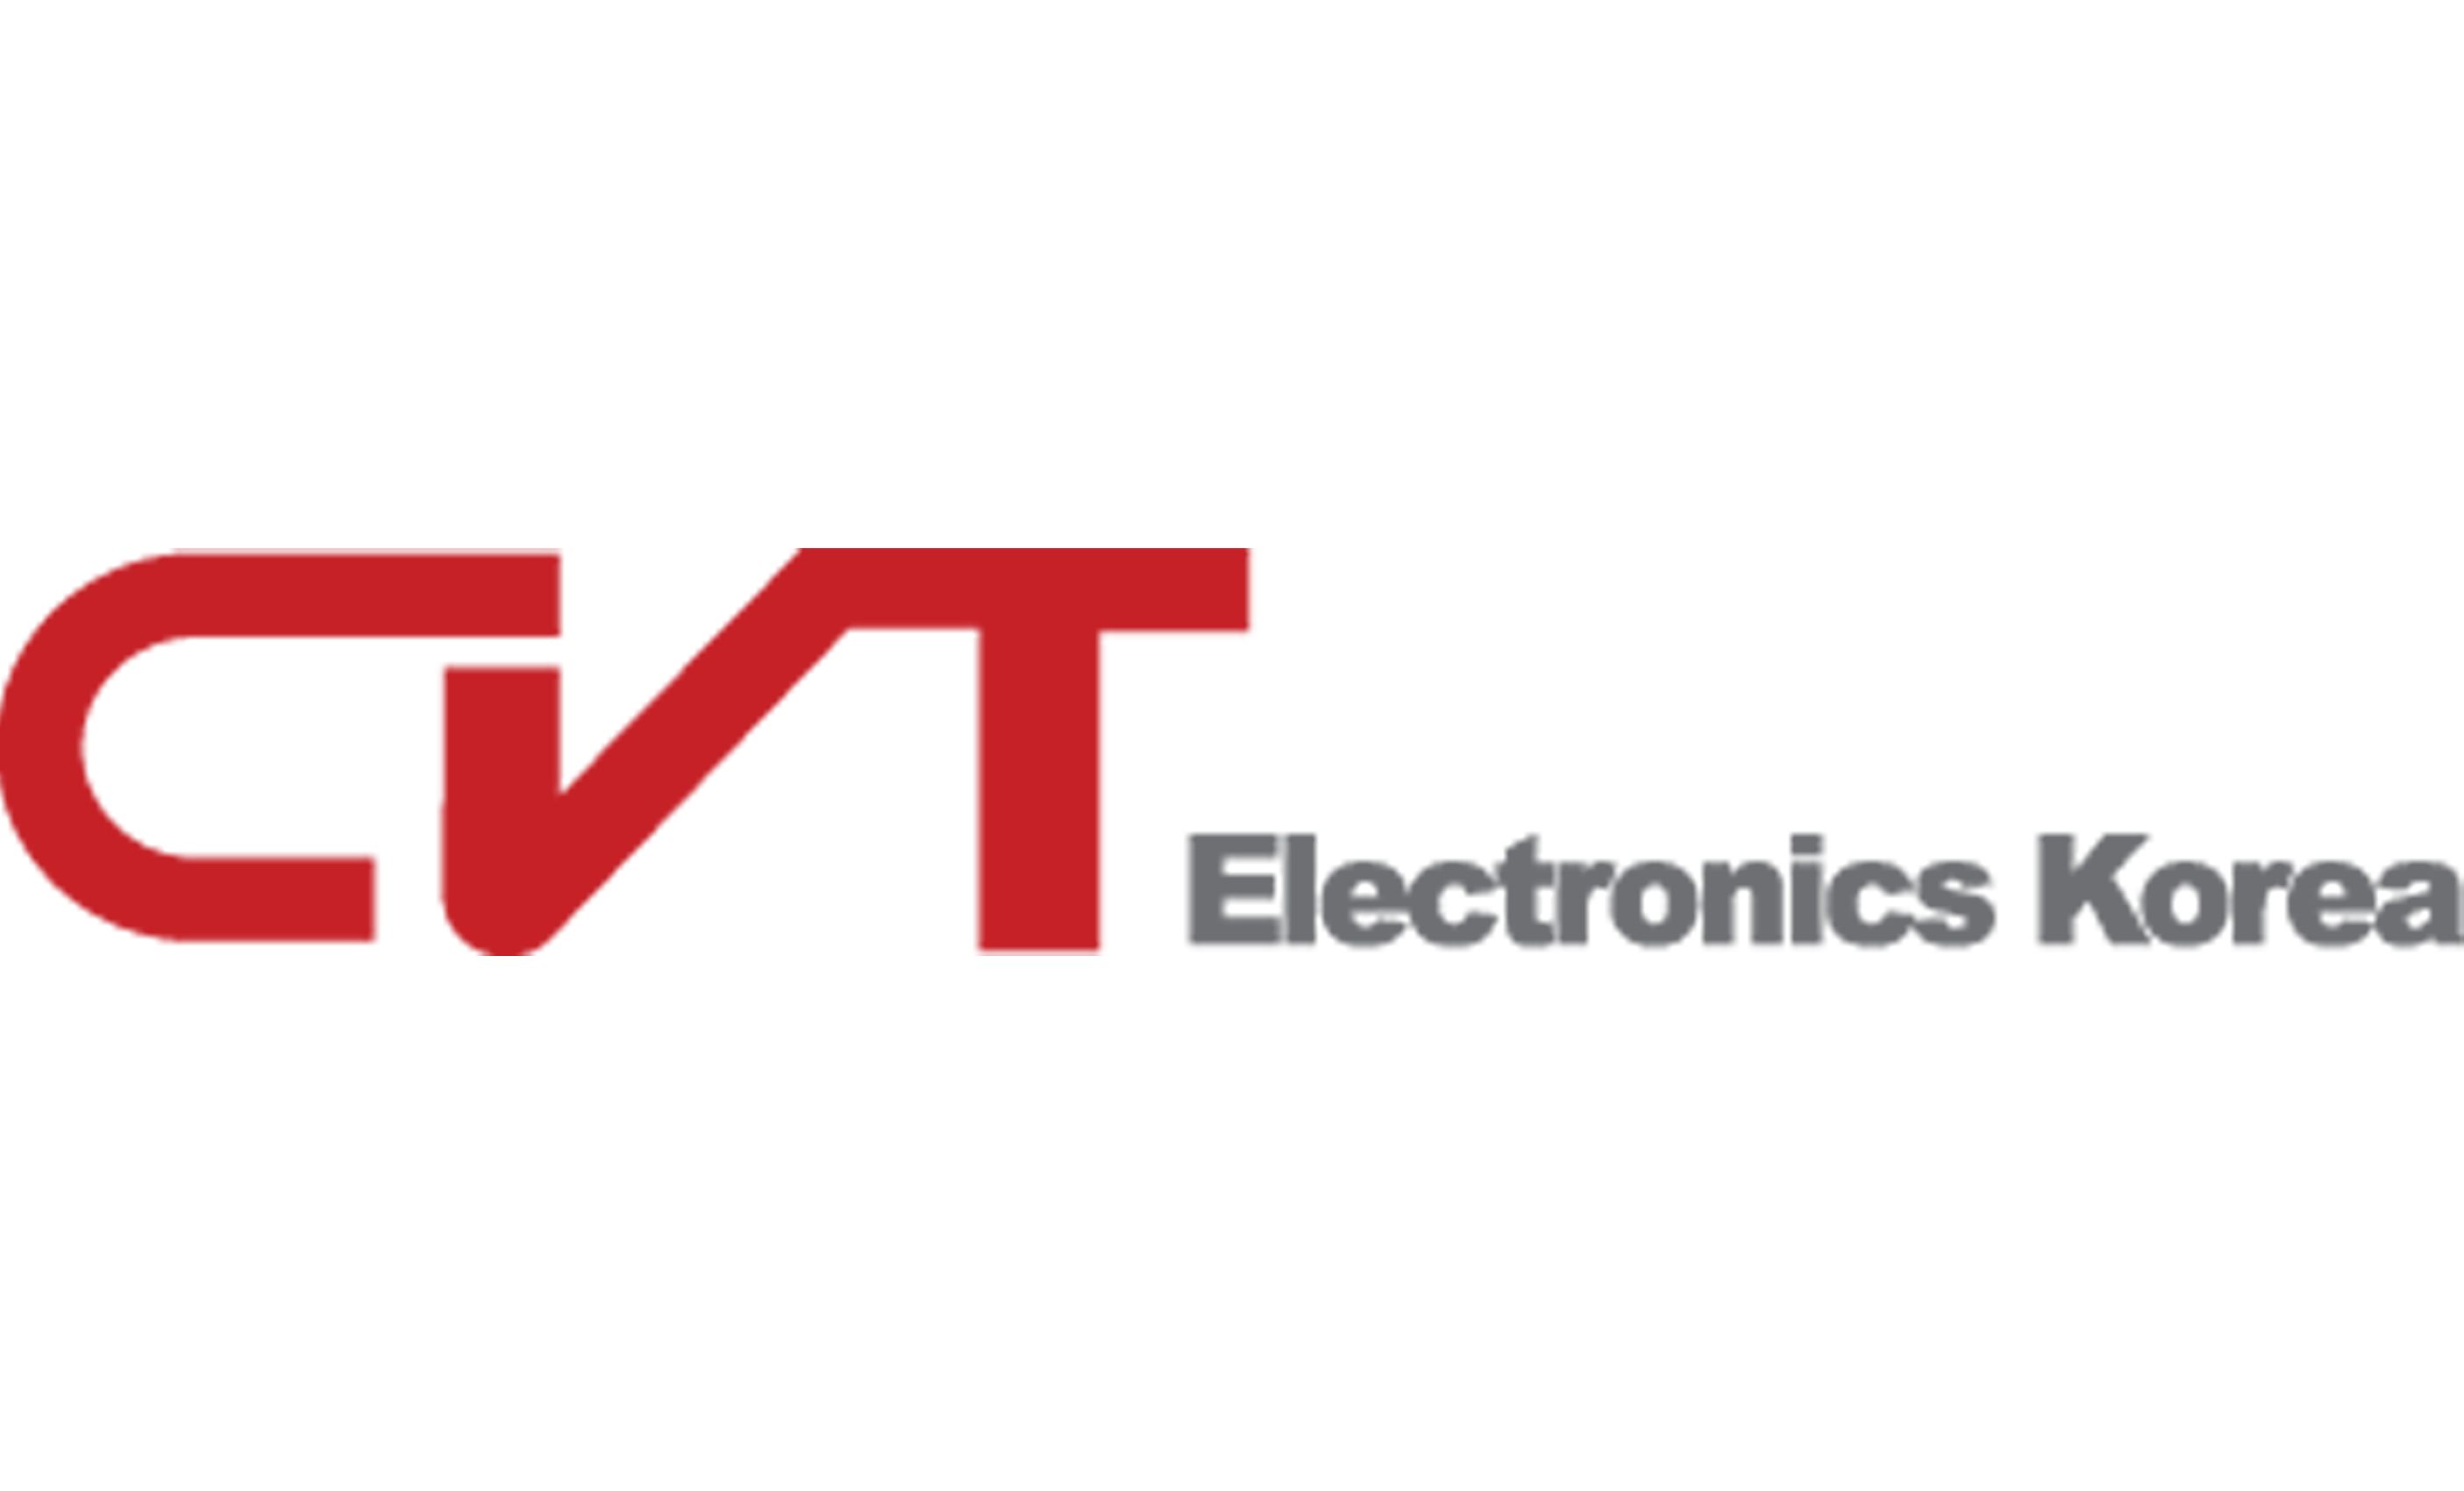 CVTElectronics Korea